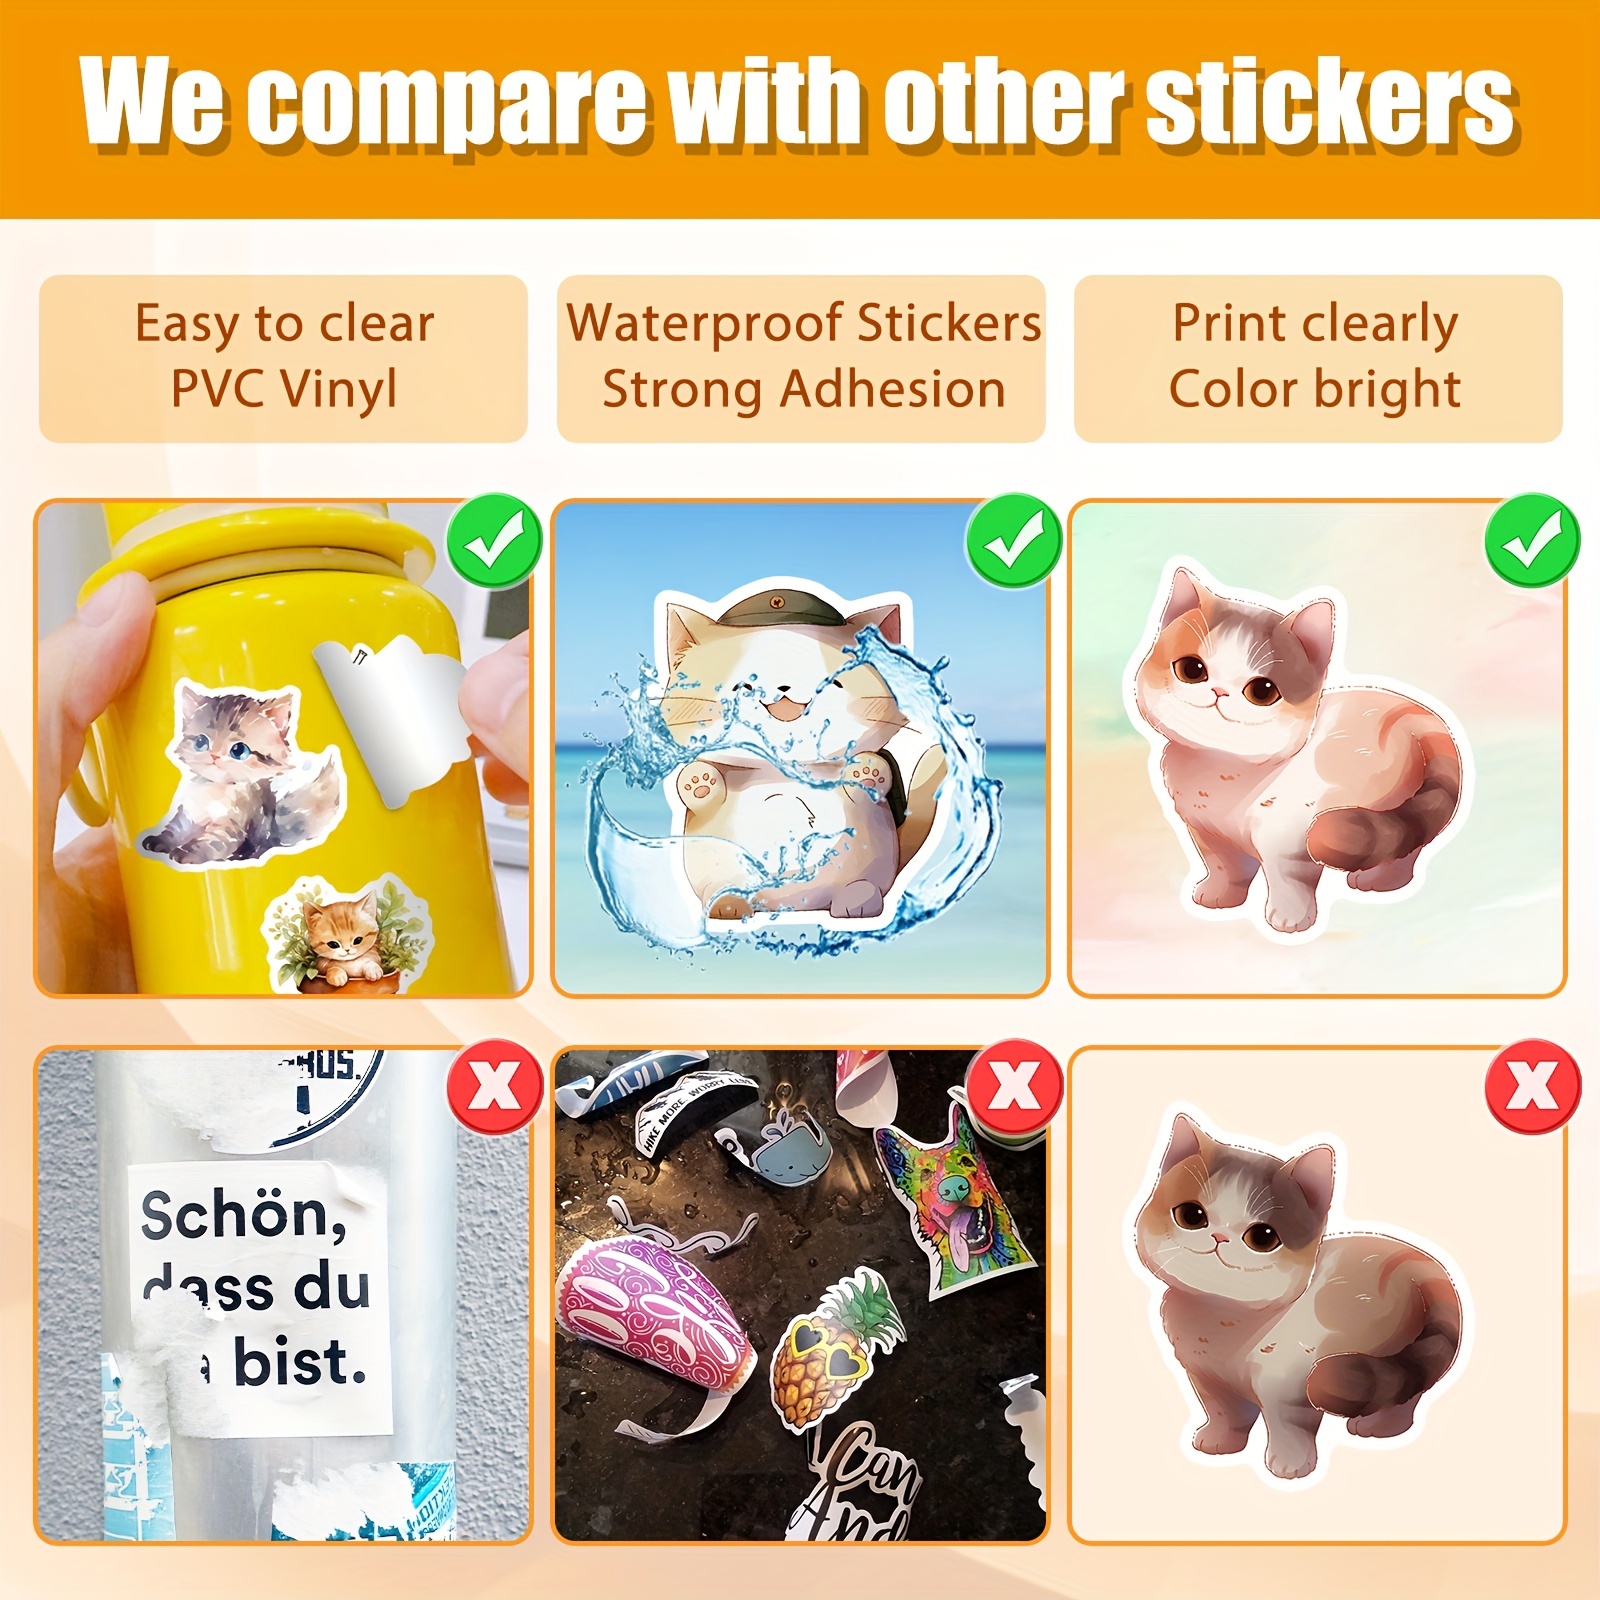 Stickers Laptop Cat, Cartoon Cute Stickers Cats